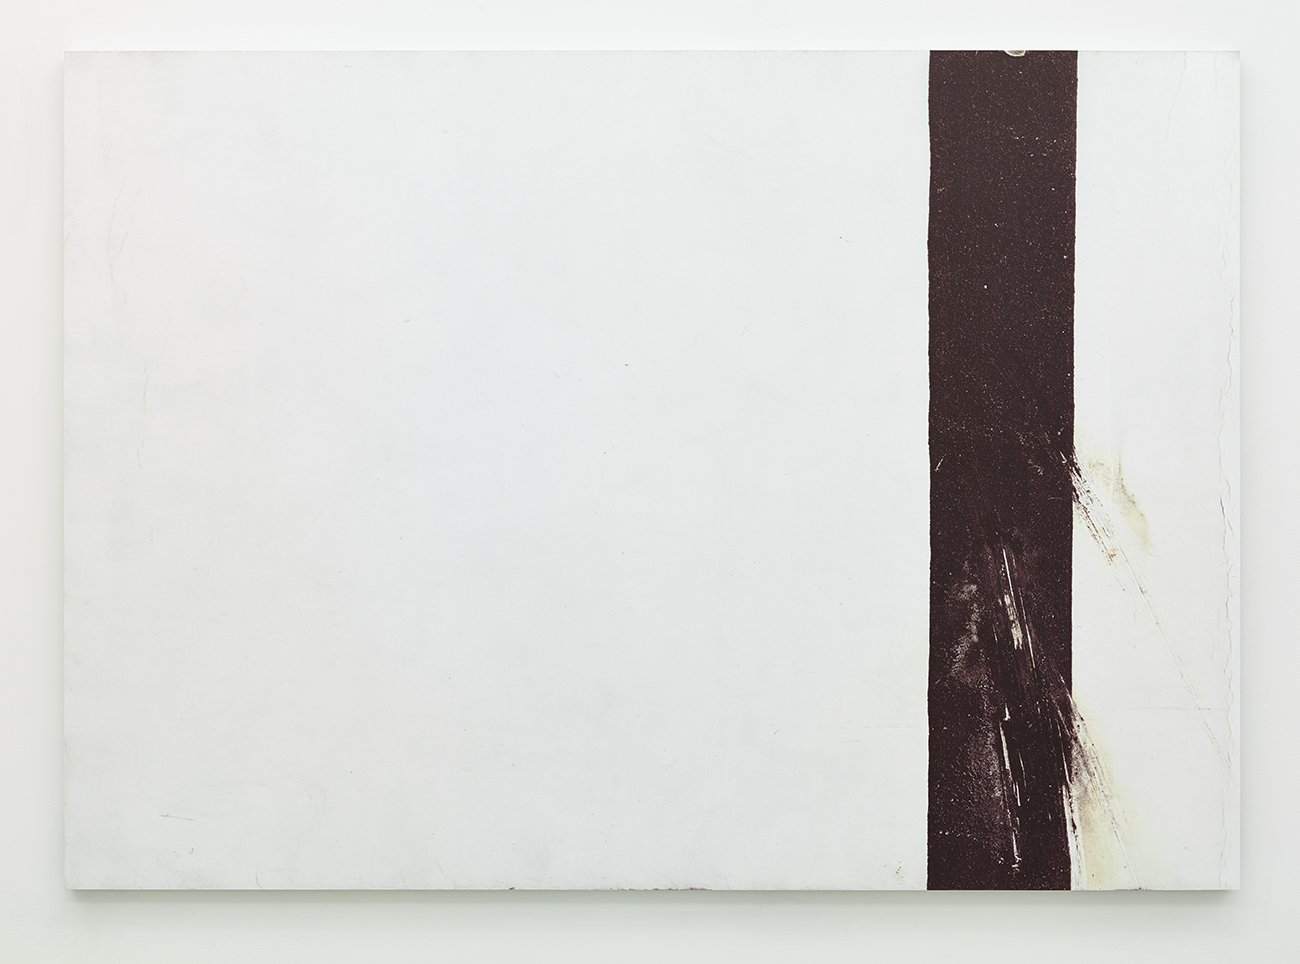 Alex Perweiler, Jaibreak, 2014. UV curable ink and paint on aluminium panel, 60 x 84 inches.